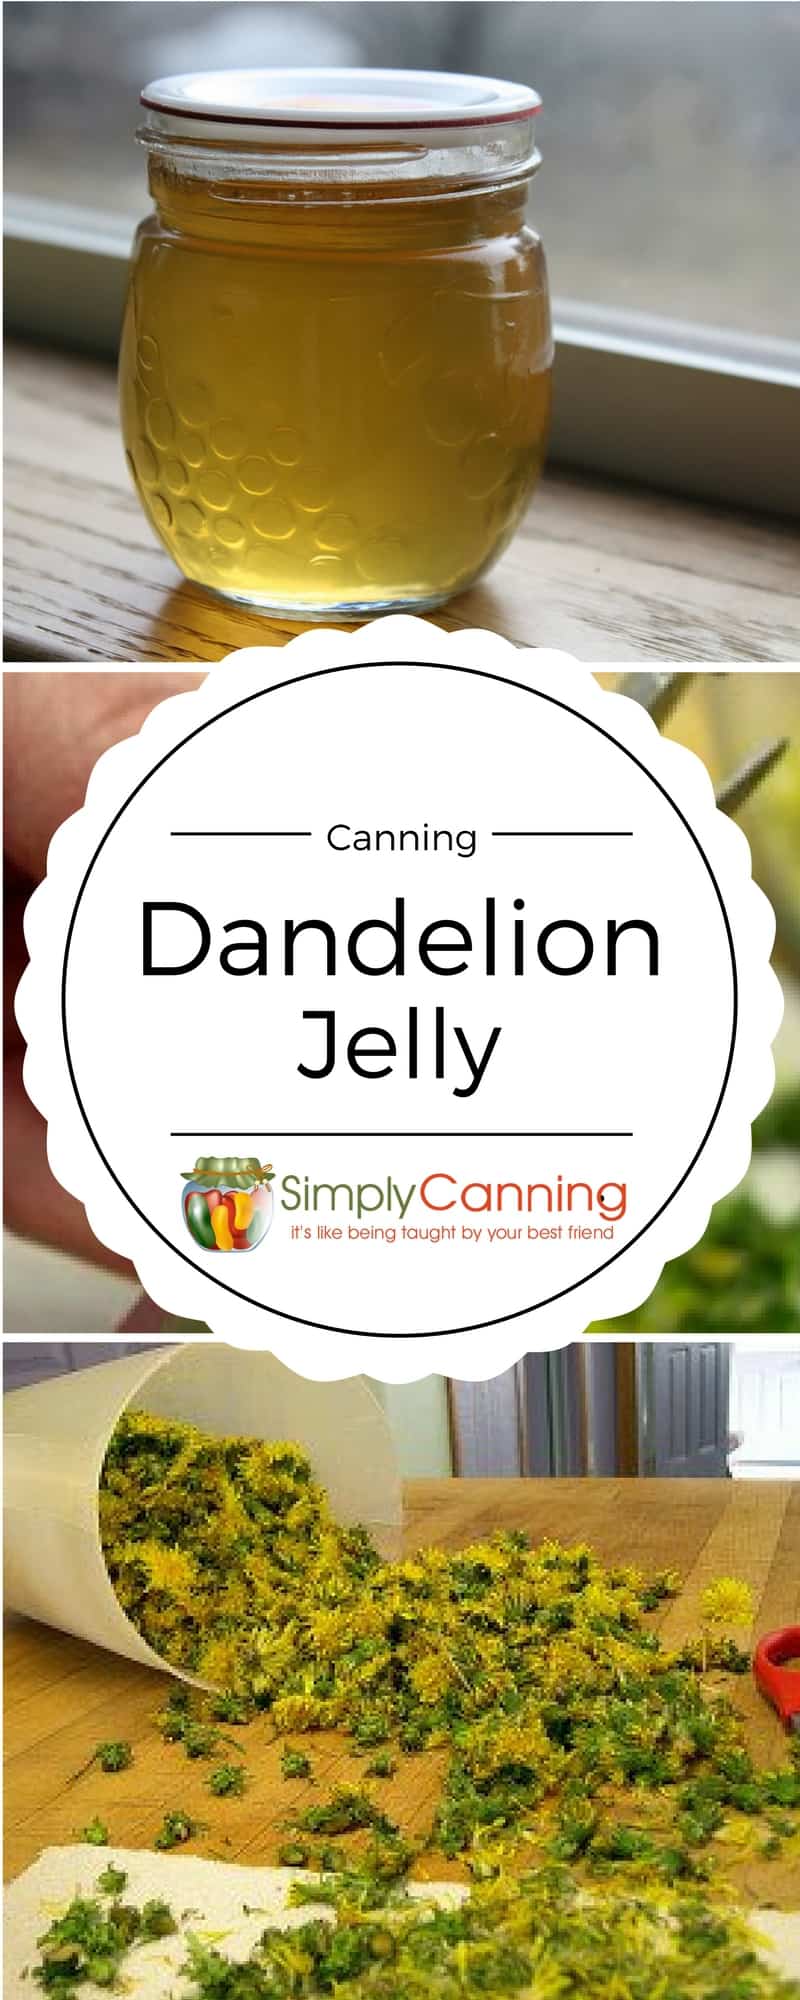 dandelion jelly pin